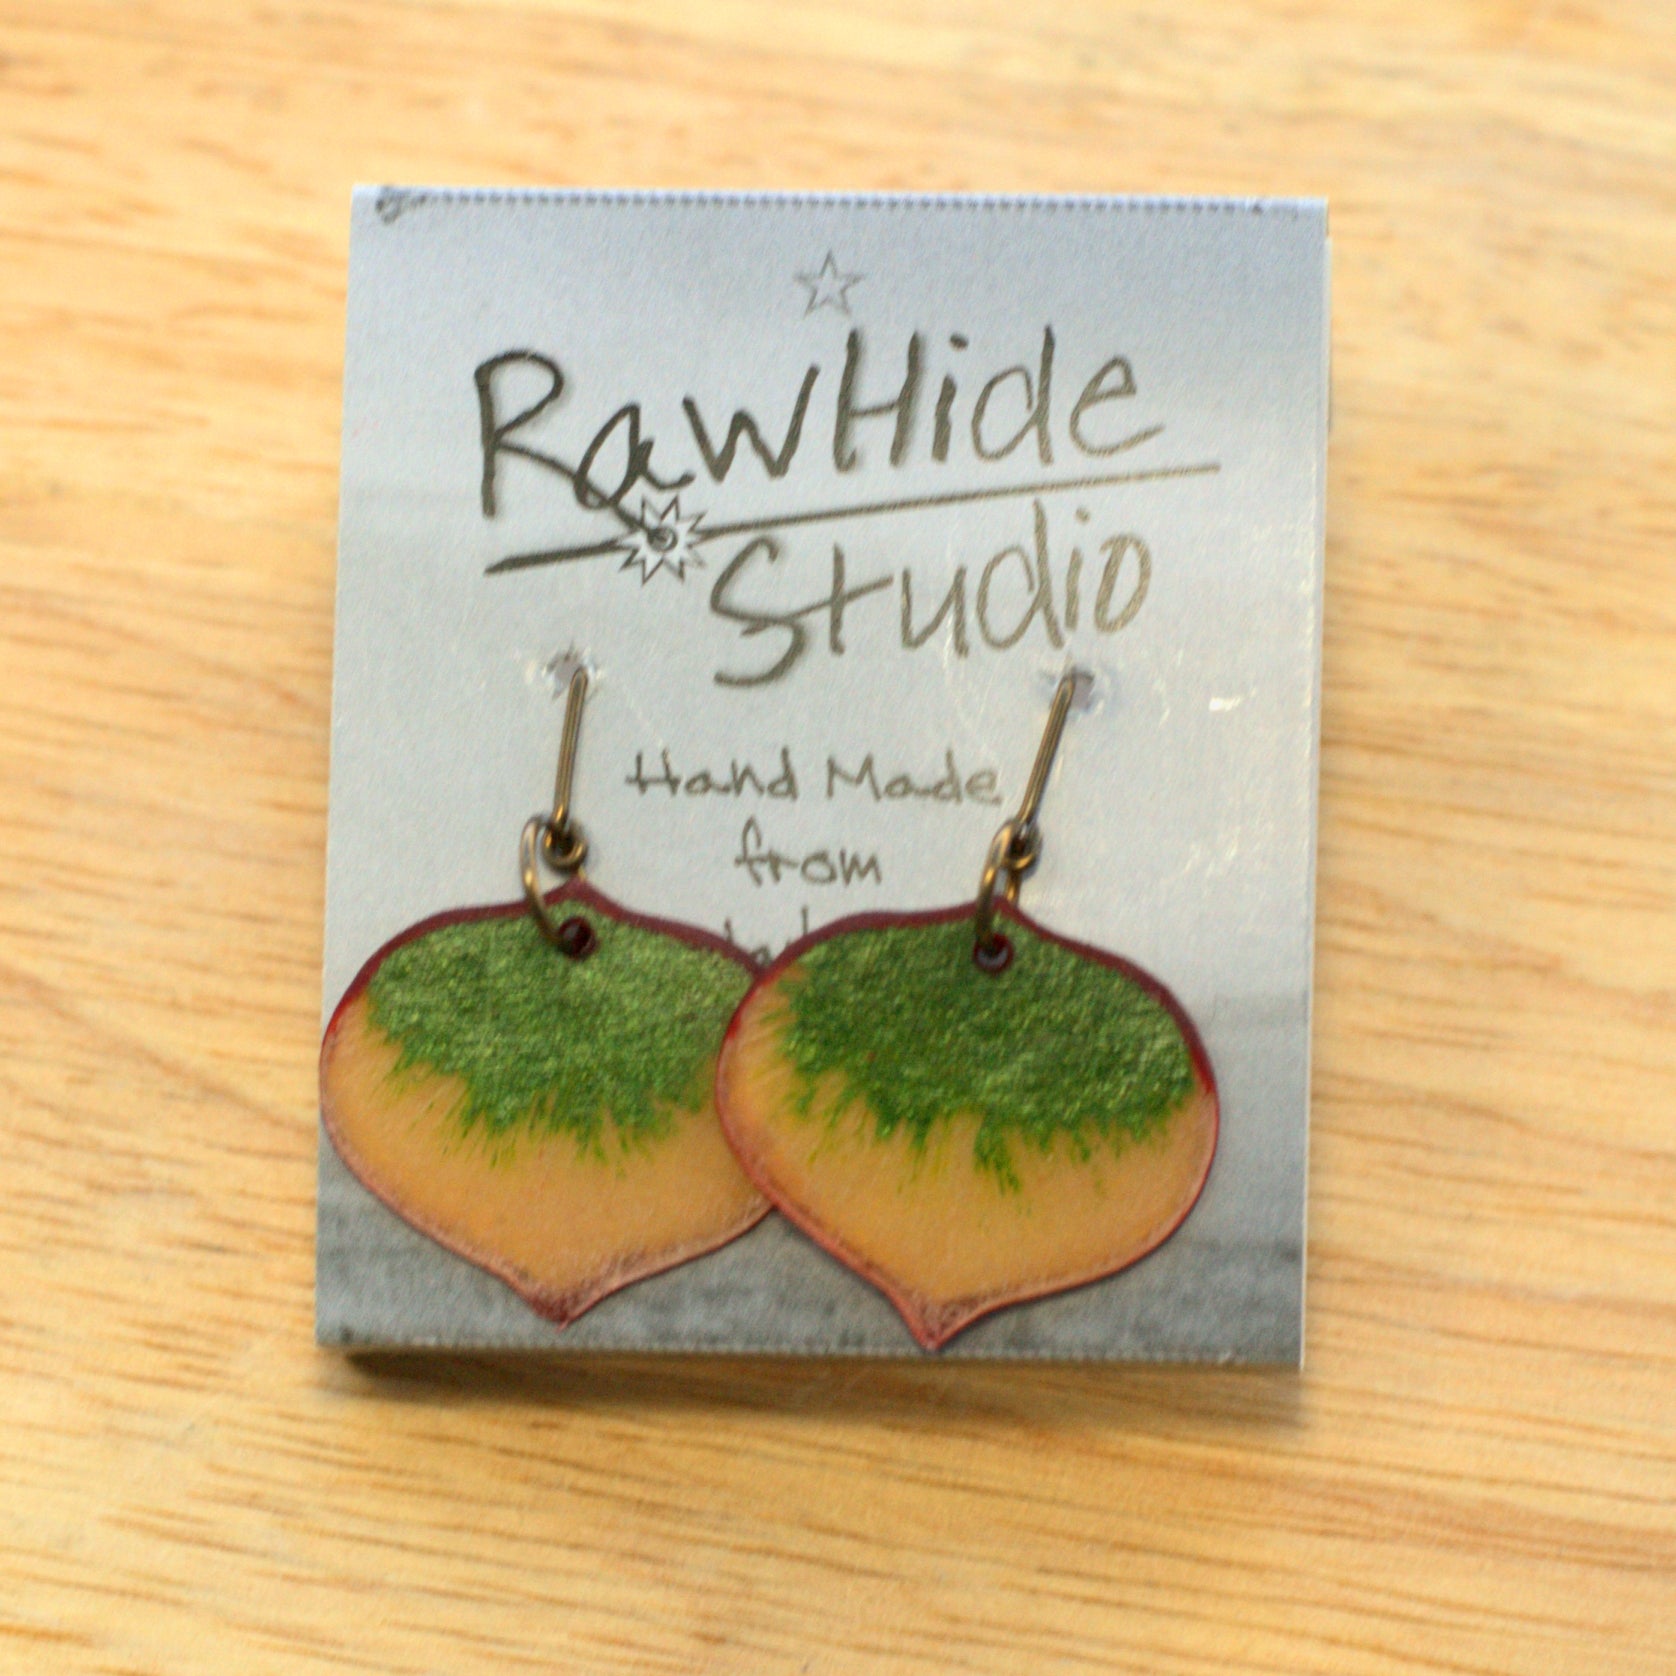 Small green Aspen leaf earrings on display card